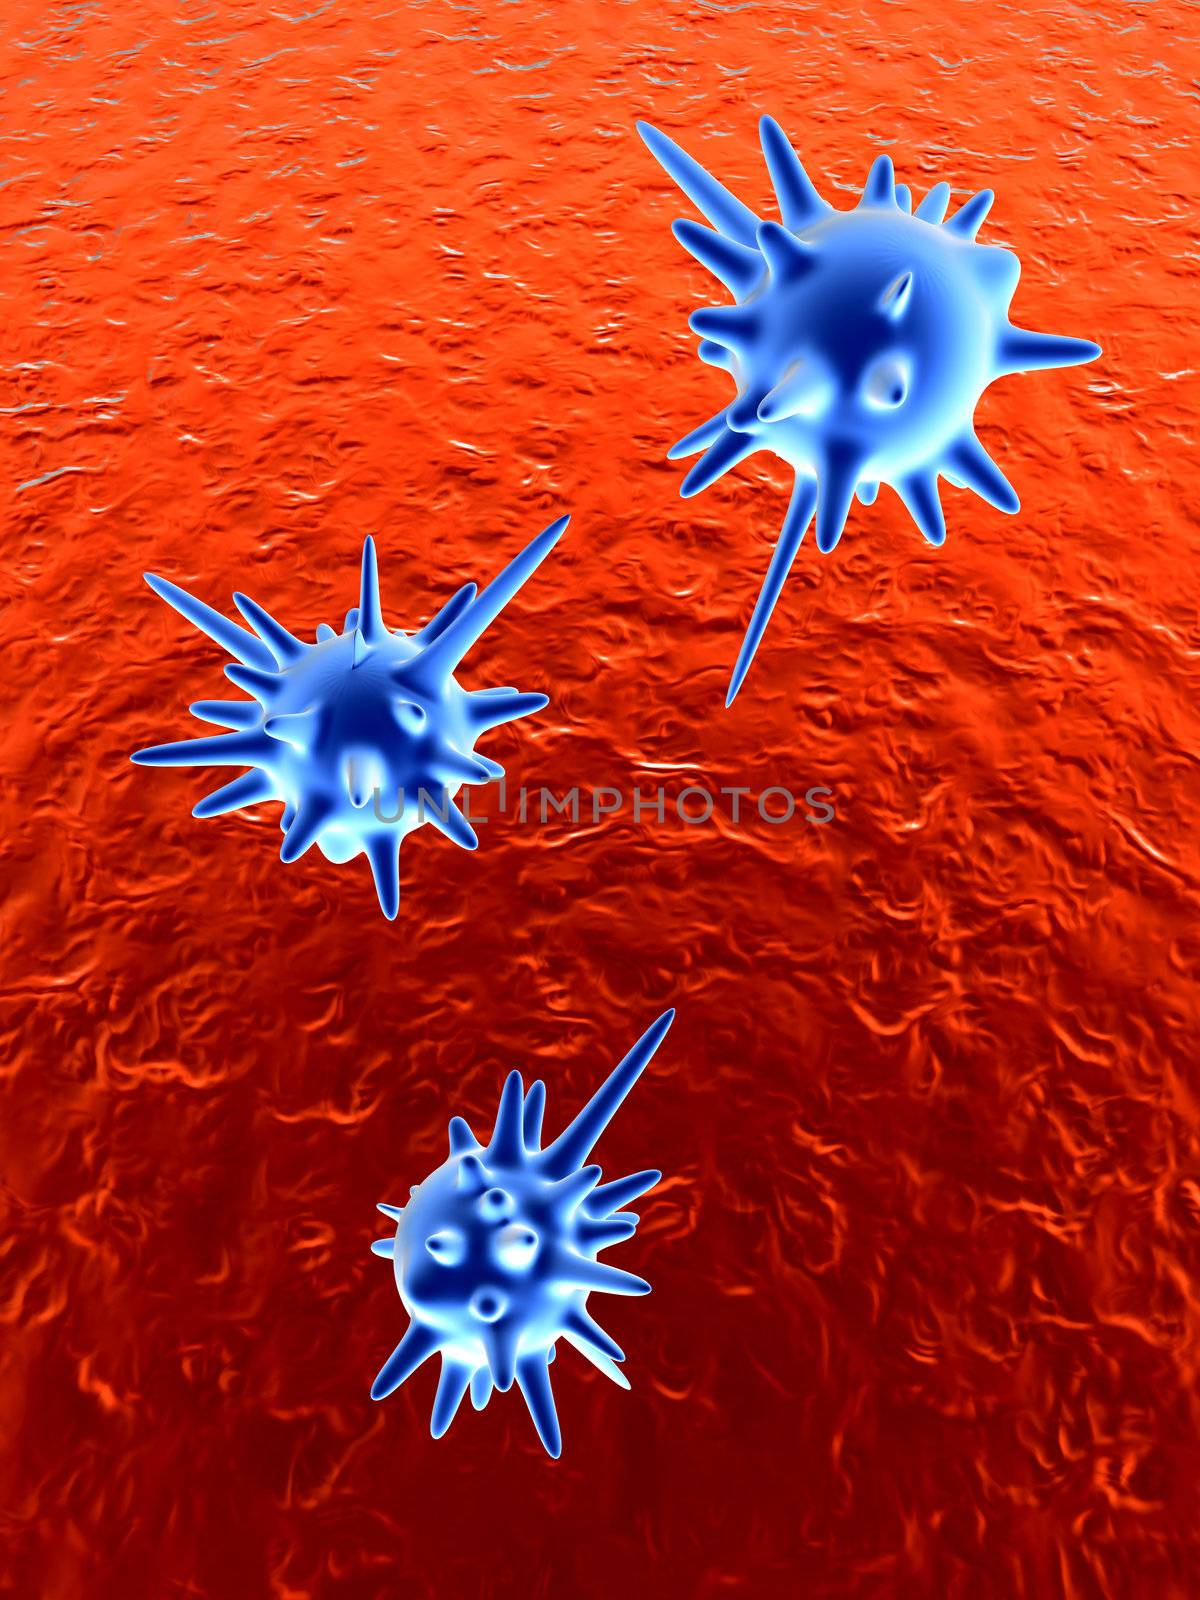 Viruses in Bloodstream by Spectral